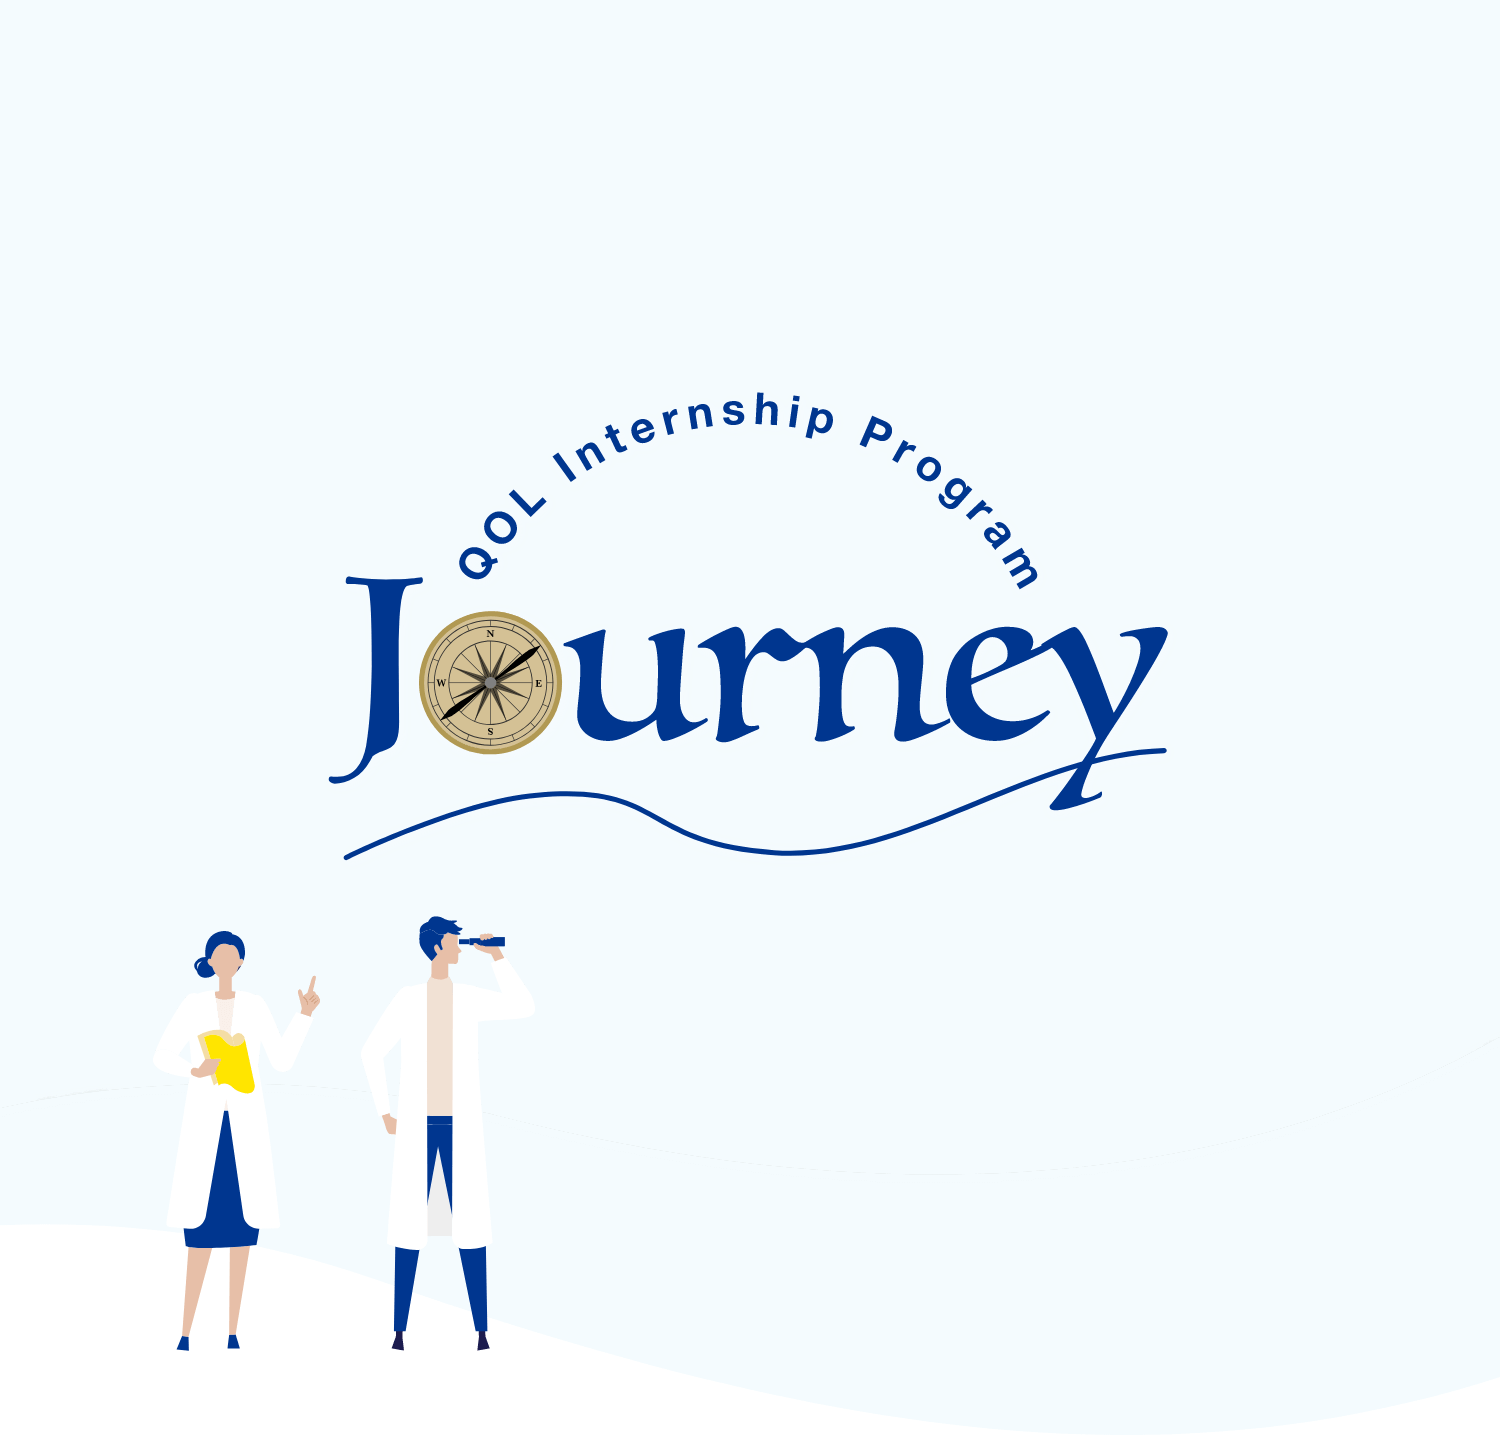 QOL Internship Program Journey 薬剤師としての、理想のキャリアを見つける旅に出よう！